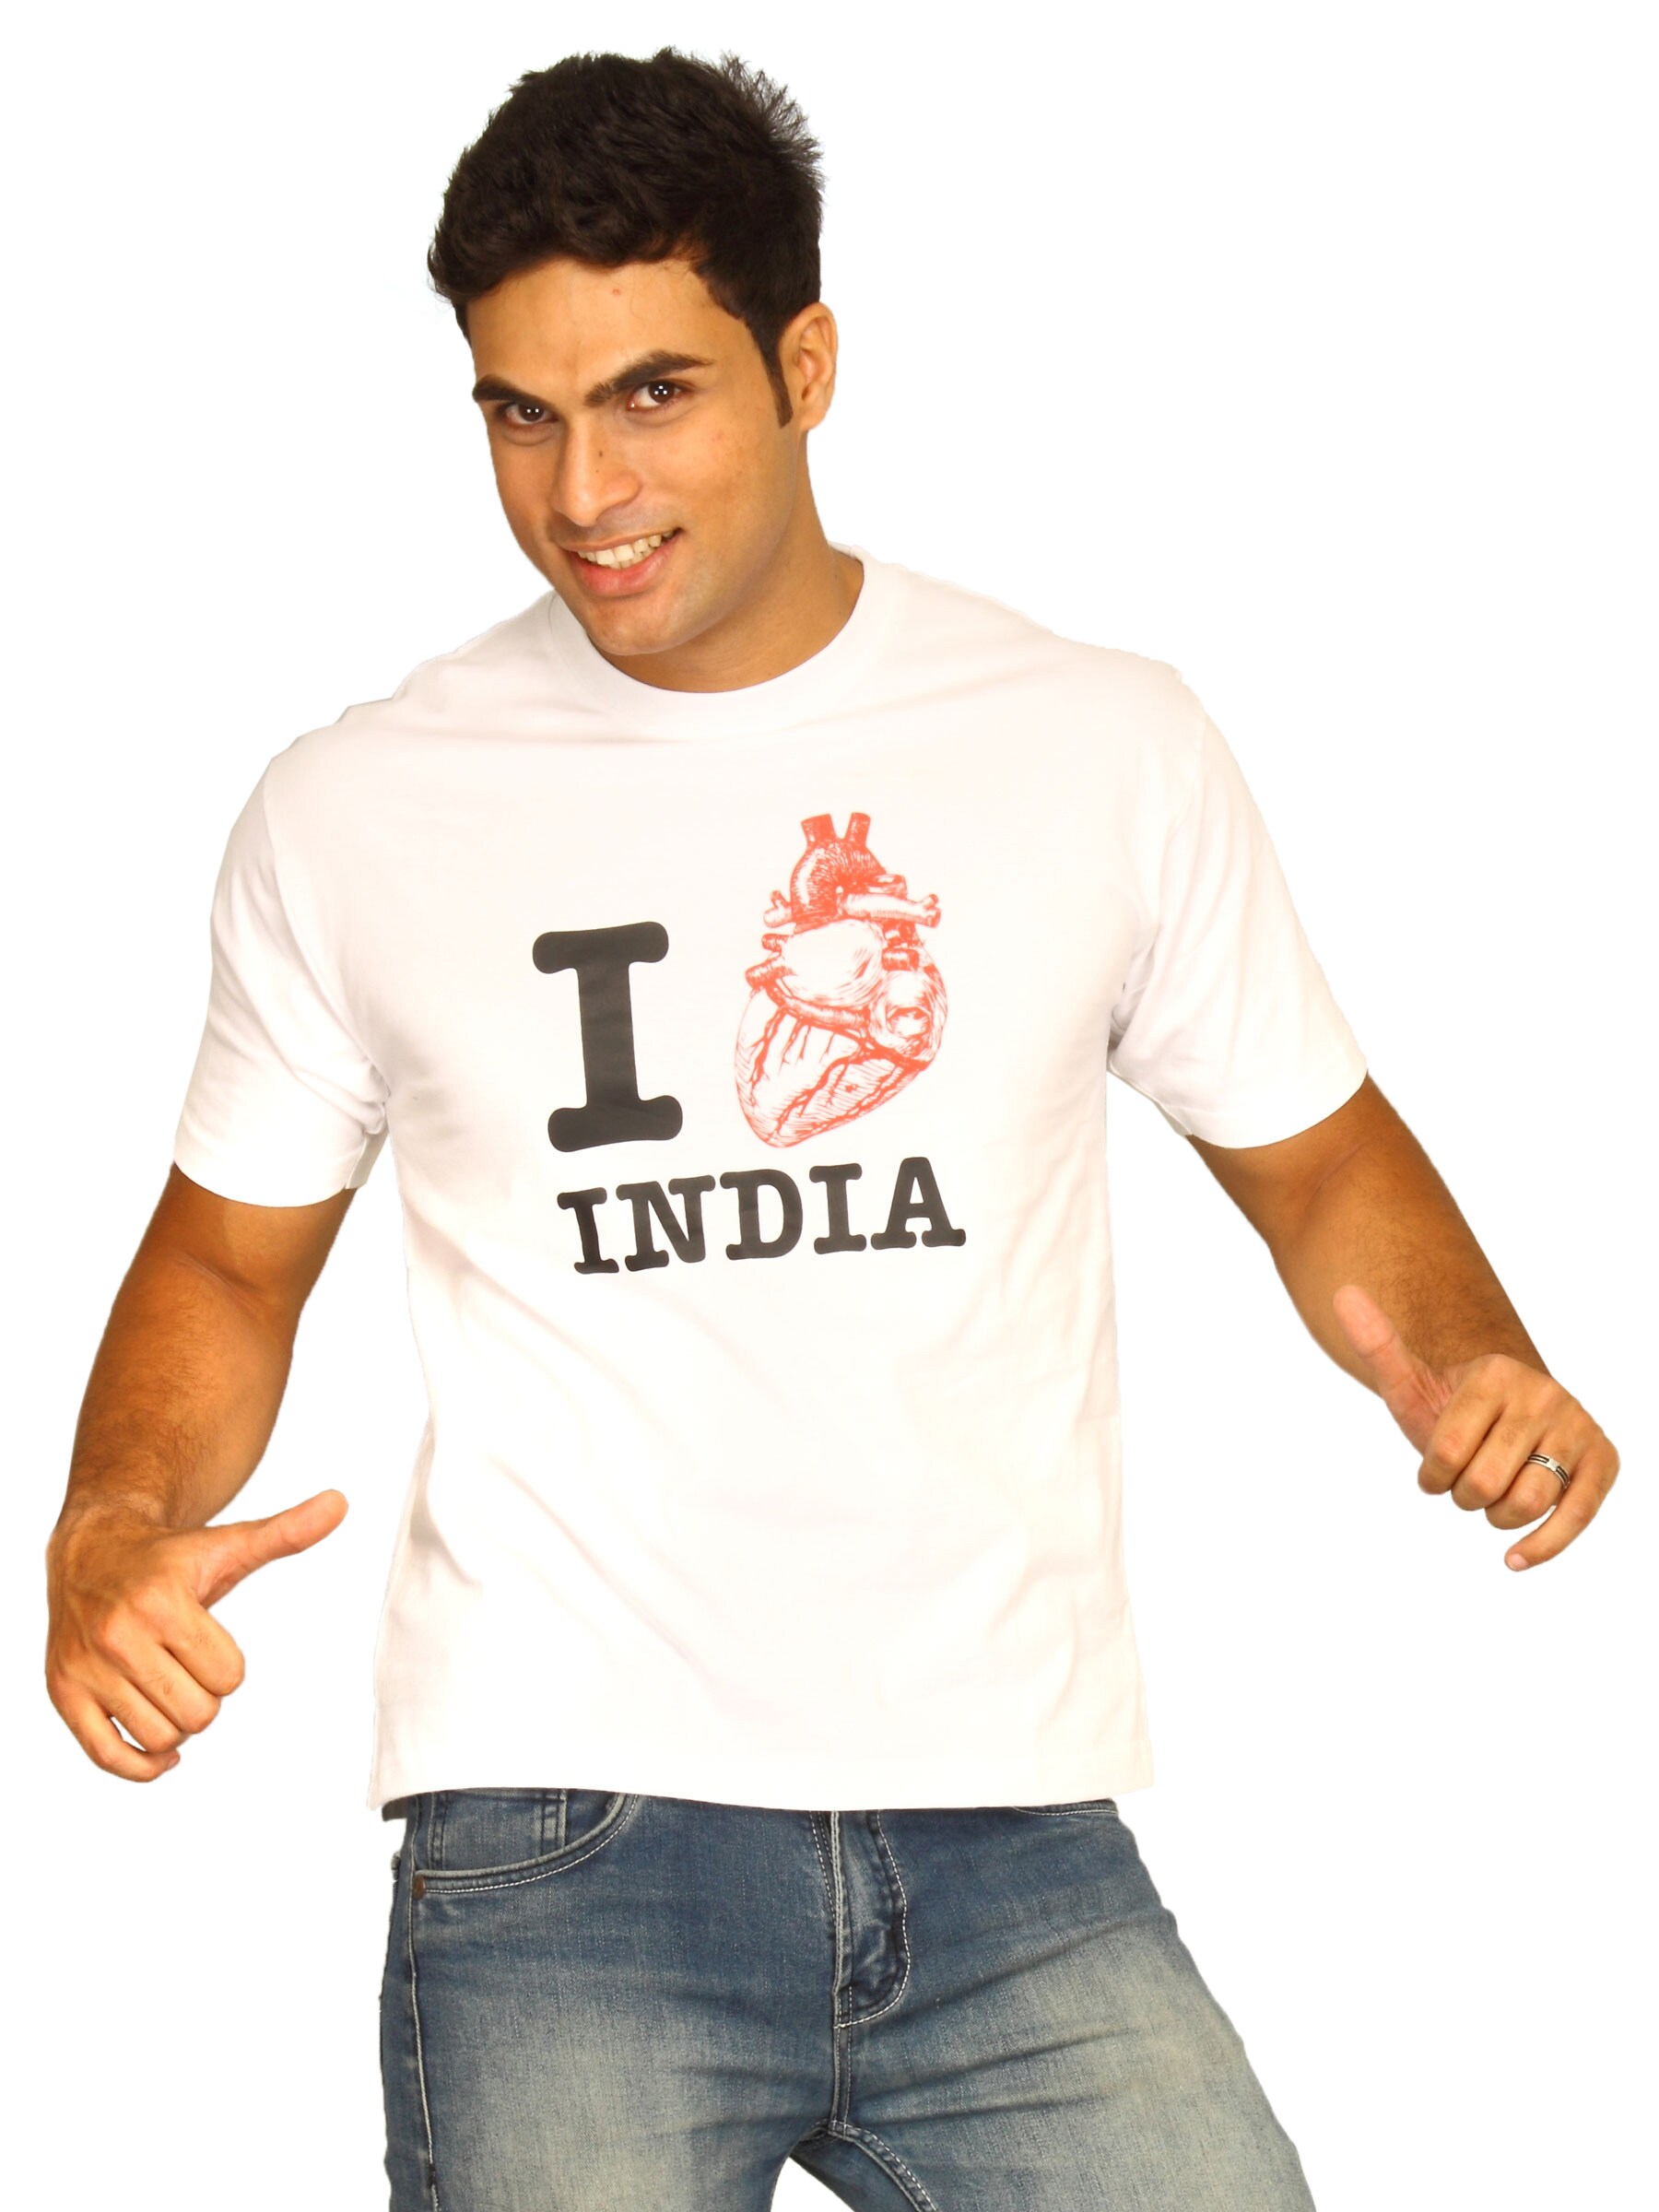 Tantra Men's Love India White T-shirt